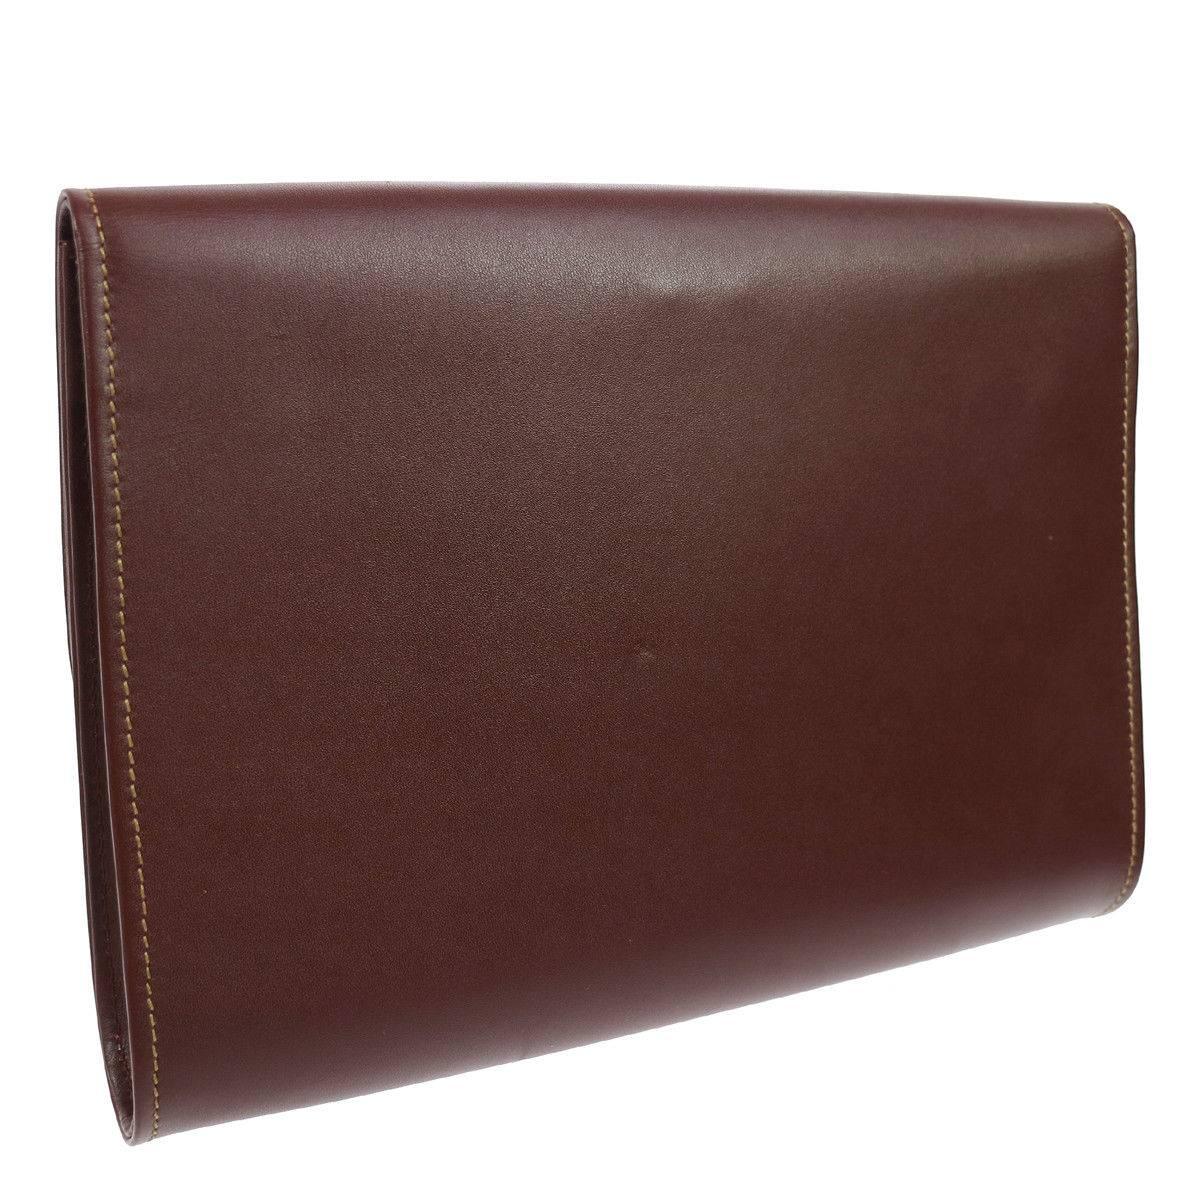 Black Cartier Bordeaux Leather Envelope Evening Fold Over Flap Clutch Bag in Box